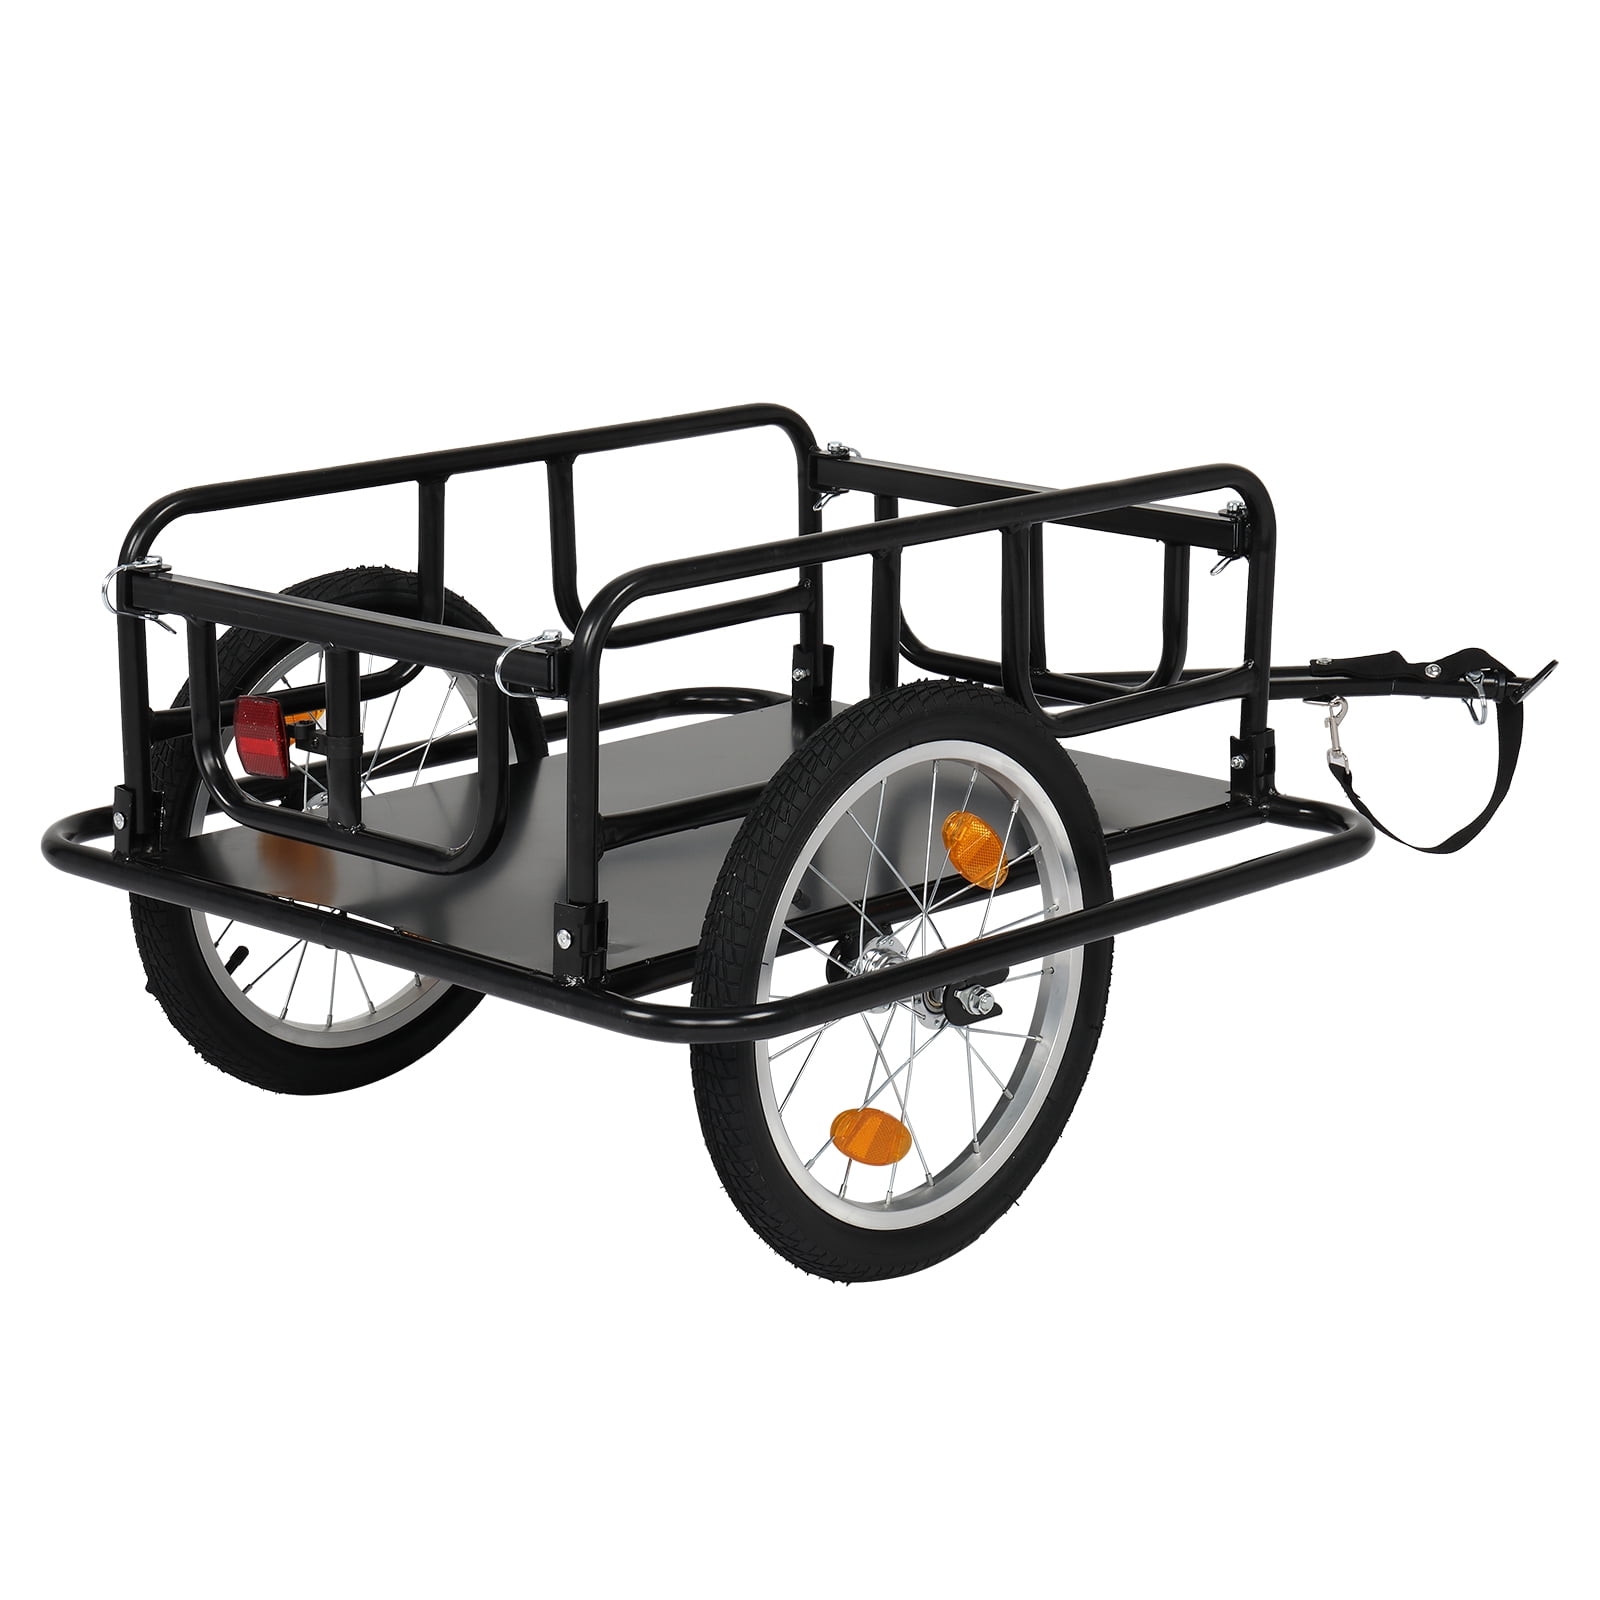 AYNEFY Bicycle Trailer,Steel Foldable Bike Cargo Trailer Bicycle Cart Stroller Wagon Trailer,50 kg Load Capacity 